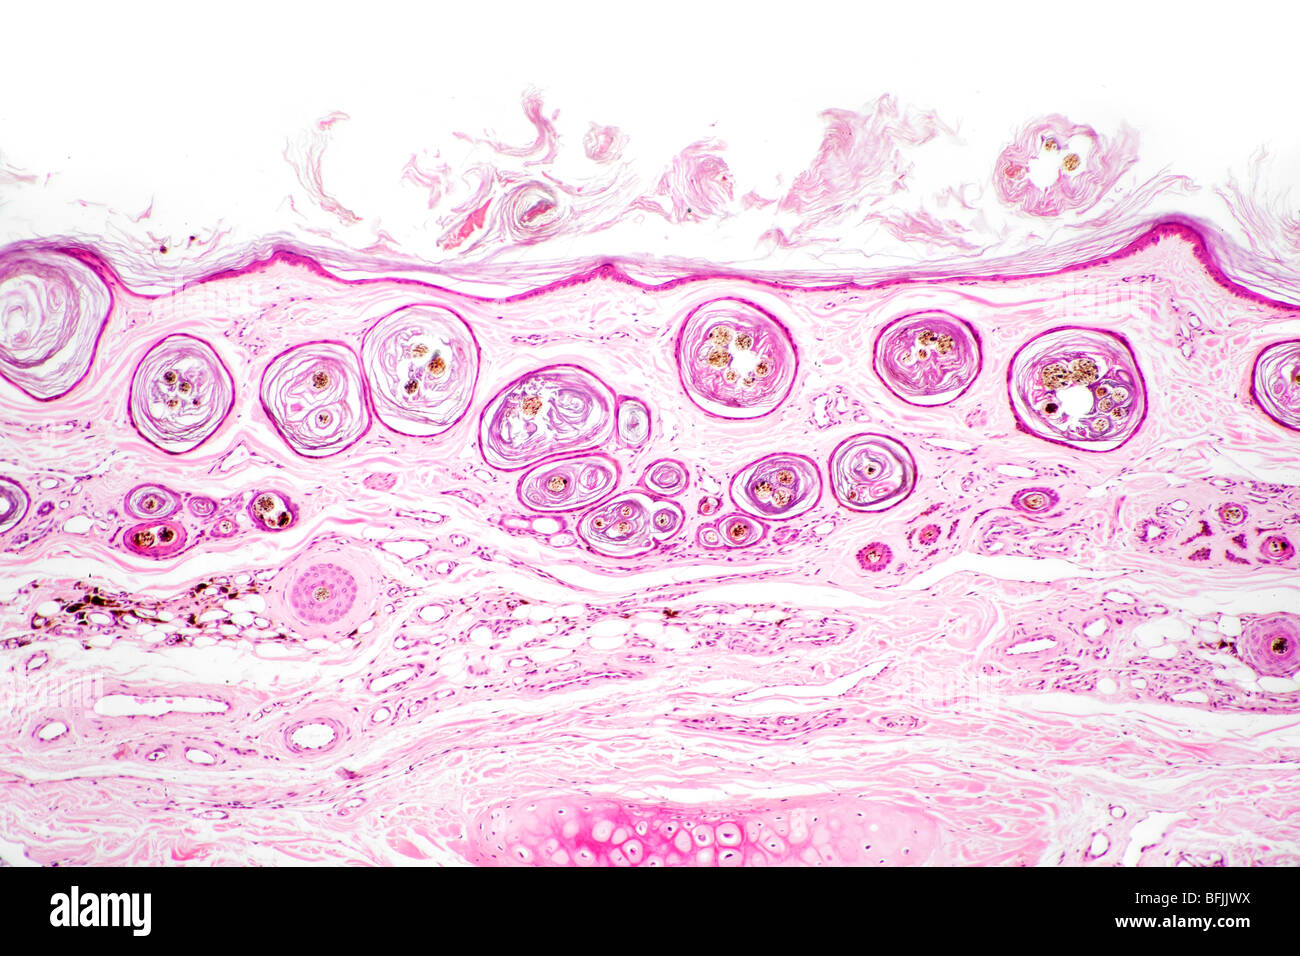 Hellfeld gebeizt Mikrophotographie Säugetier Haarfollikel in der Haut (Querschnitt von oben gesehen) Stockfoto